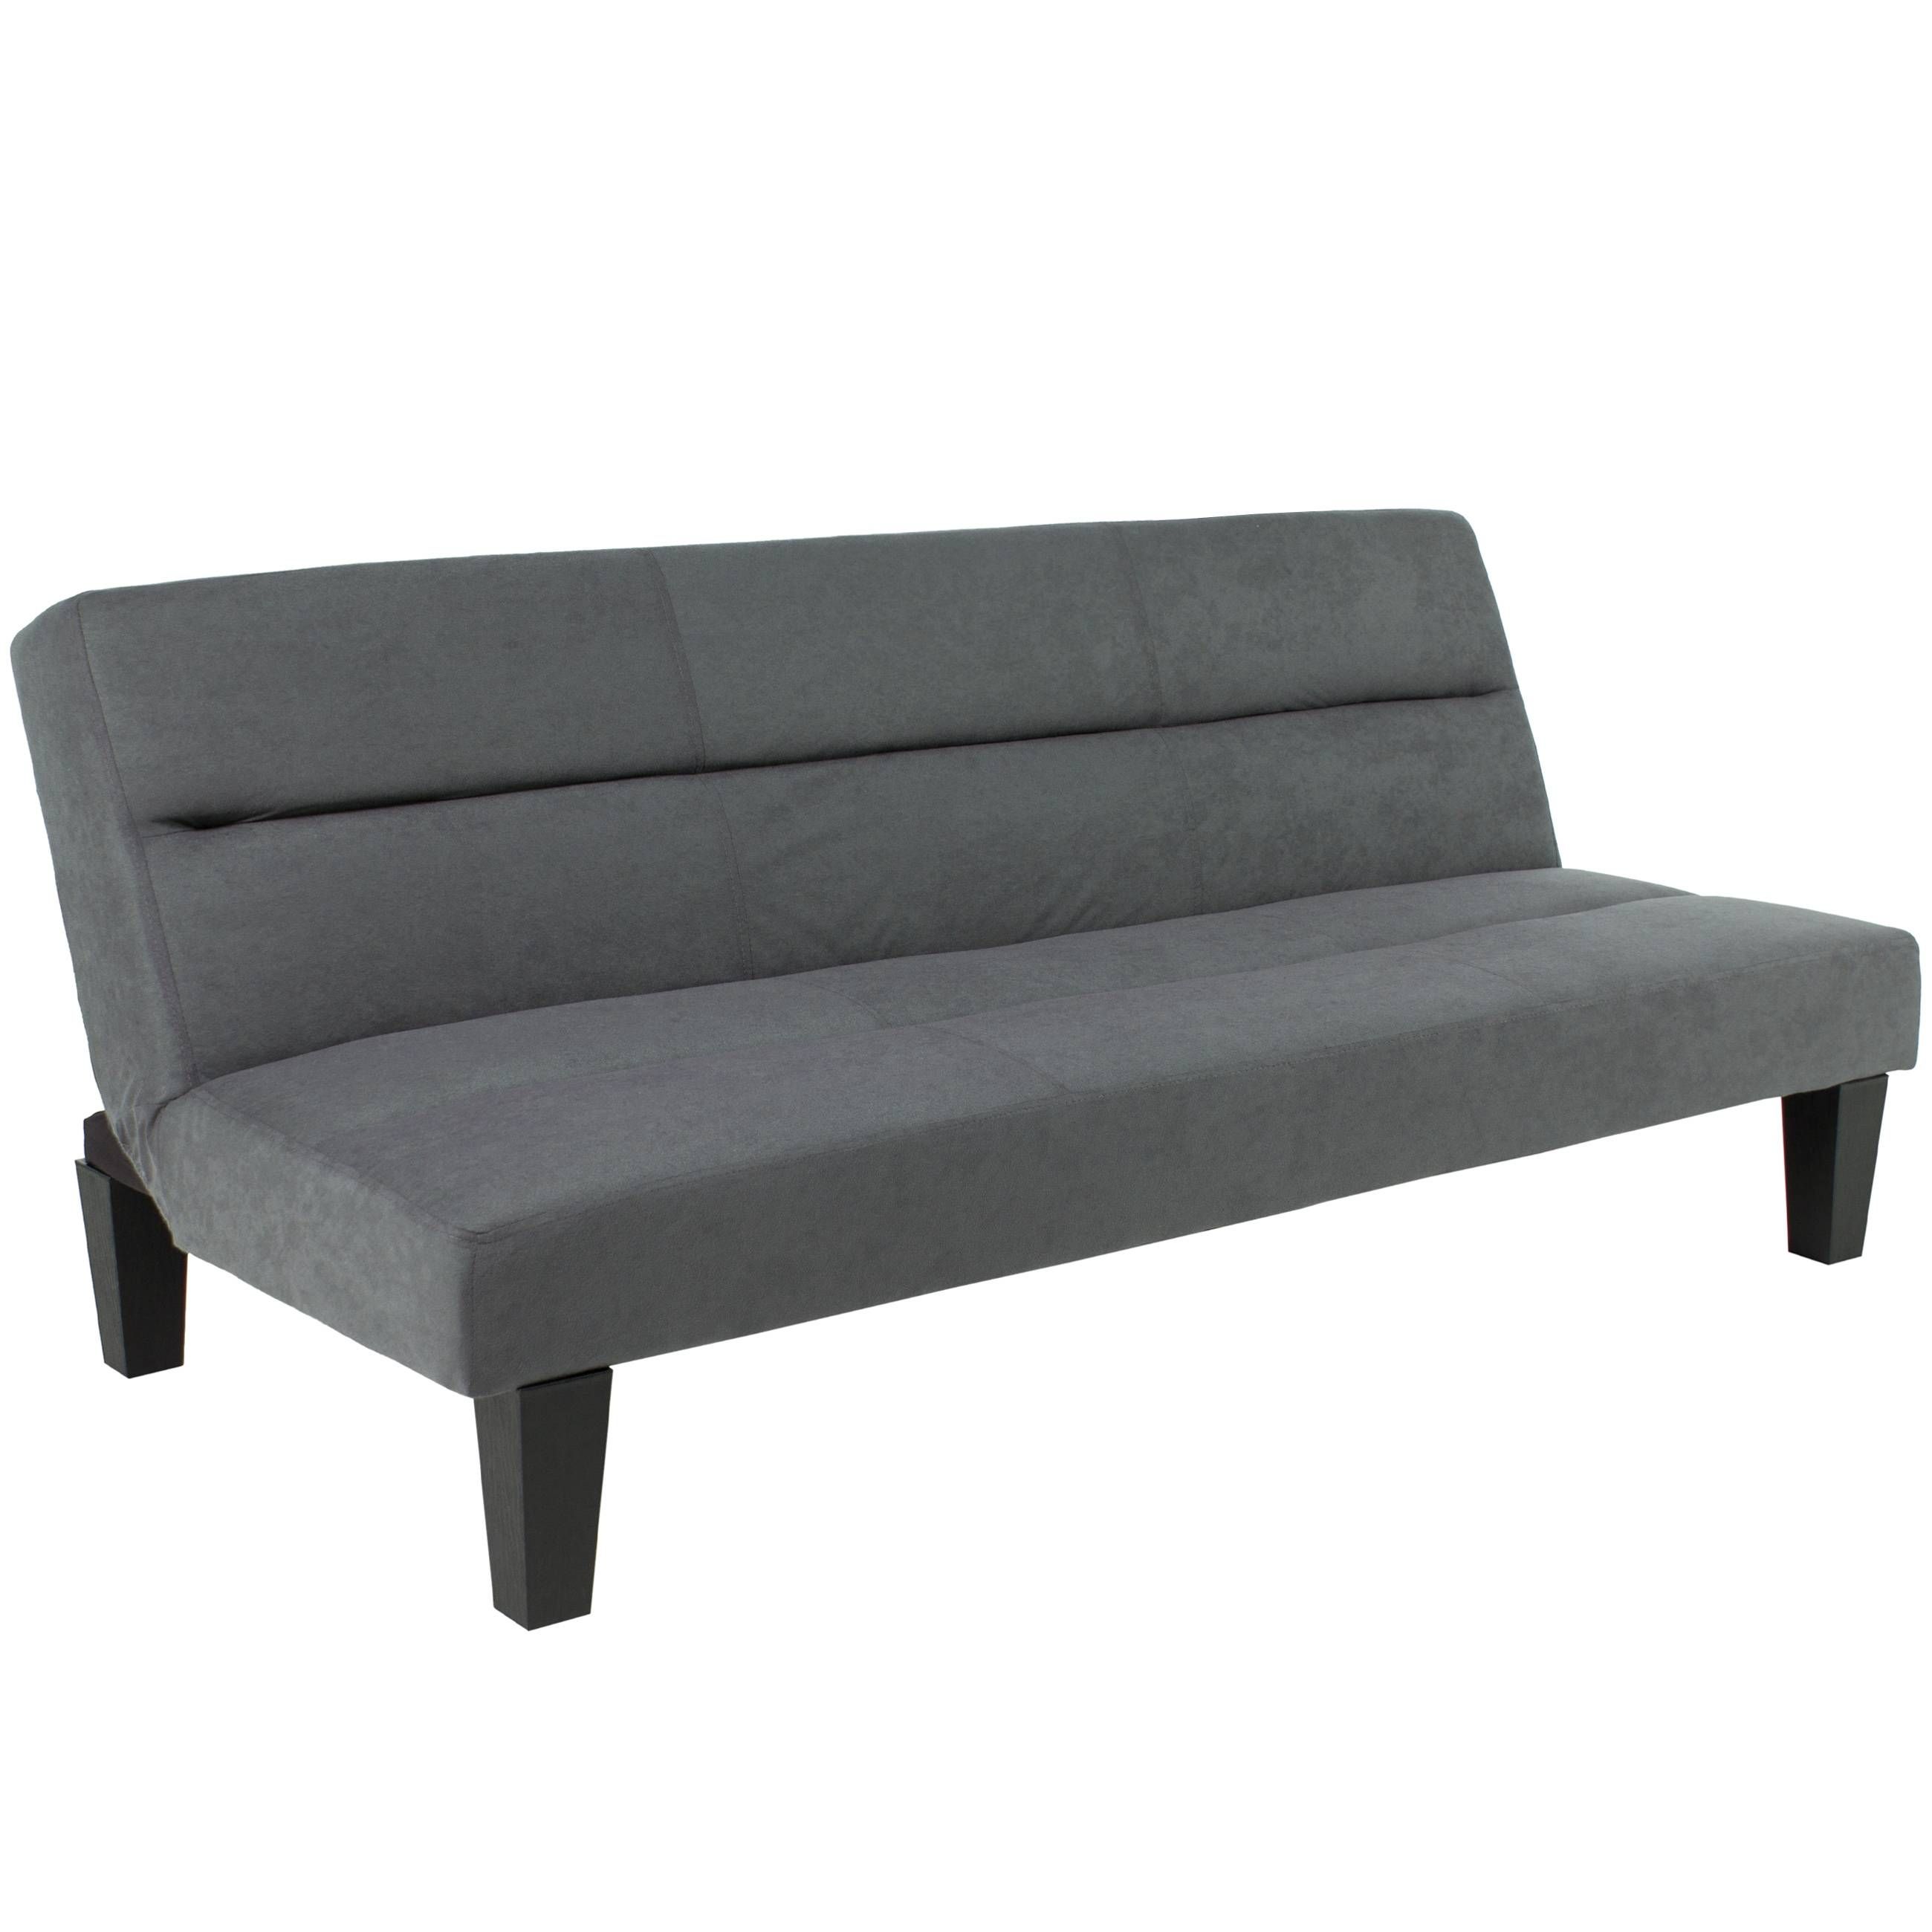 Furniture: Walmart Sofa Beds | Leather Futon Walmart | Futon Big Lots Intended For Big Lots Sofa Bed (View 20 of 30)